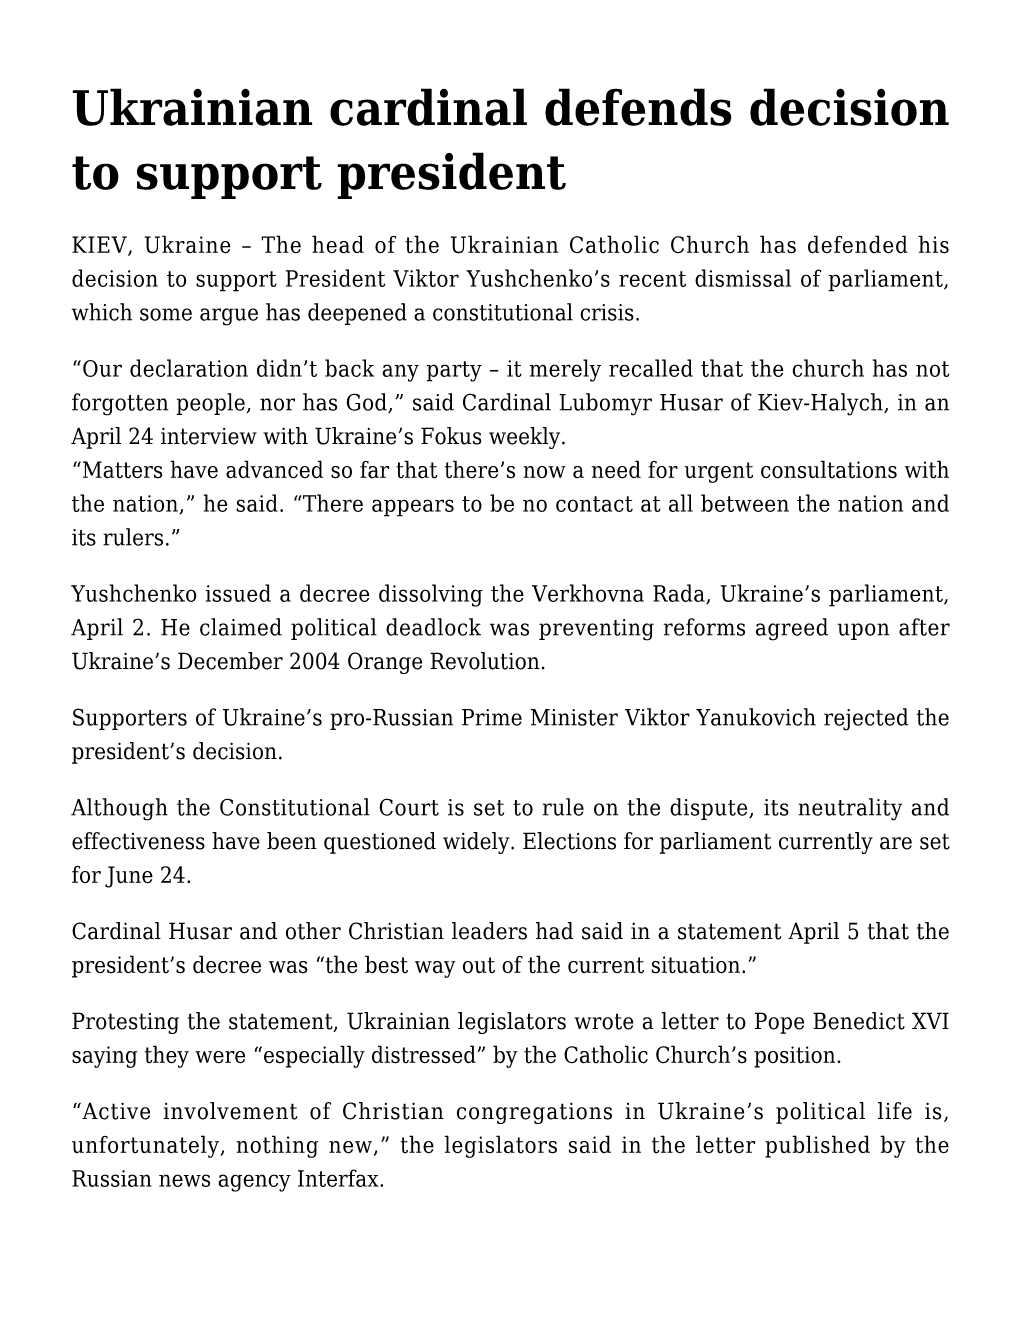 Ukrainian Cardinal Defends Decision to Support President